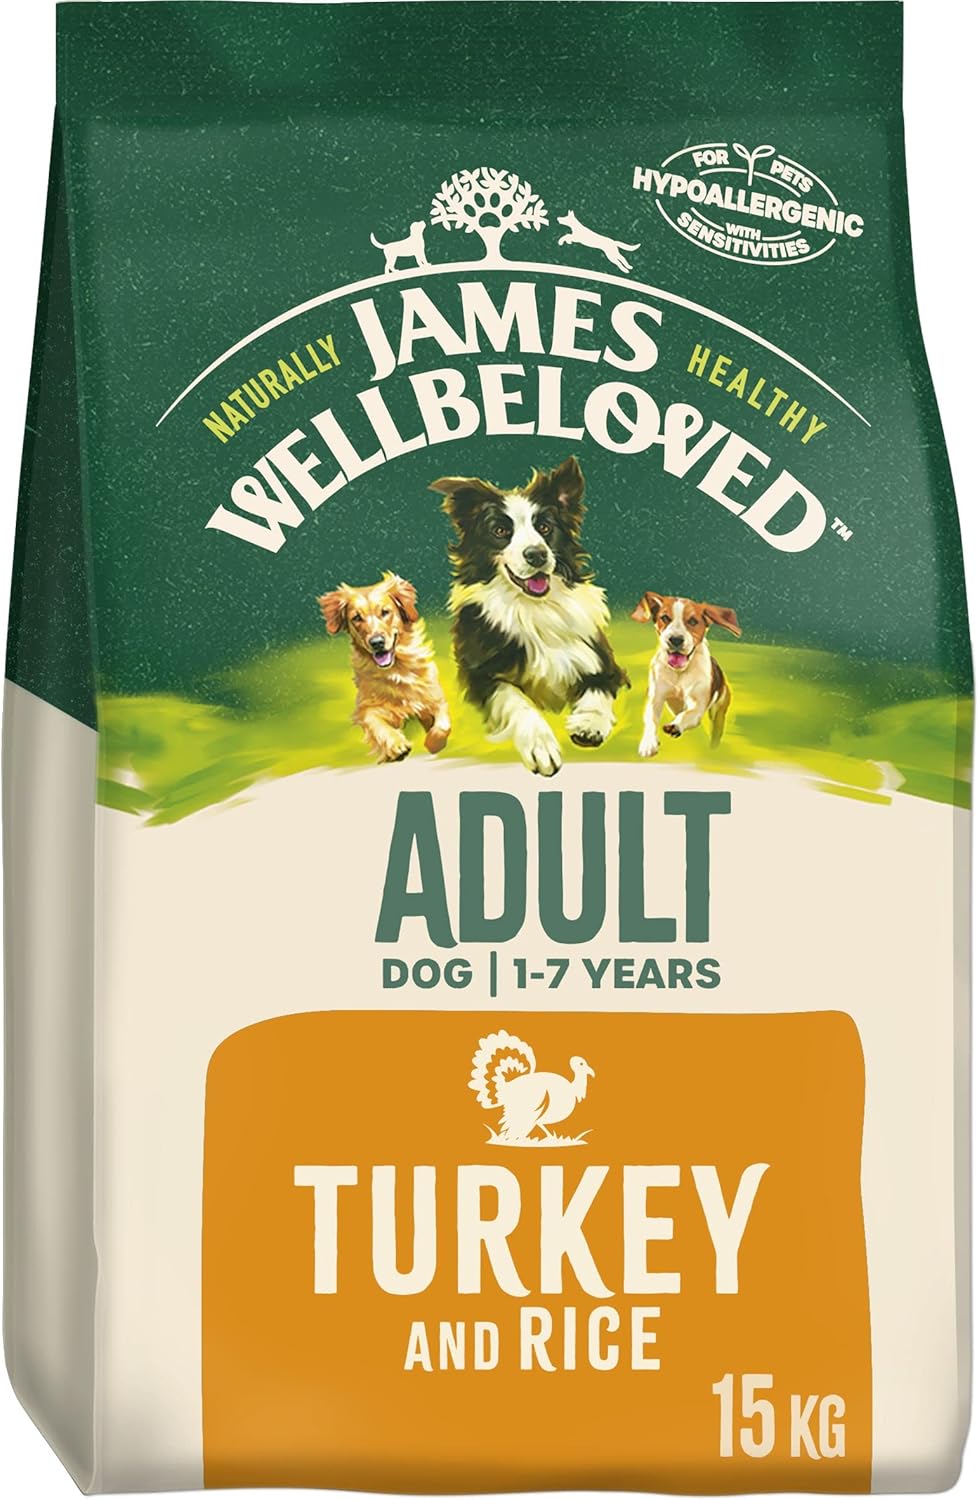 James Wellbeloved Adult Turkey & Rice 15 kg Bag, Hypoallergenic Dry Dog Food?02JT1